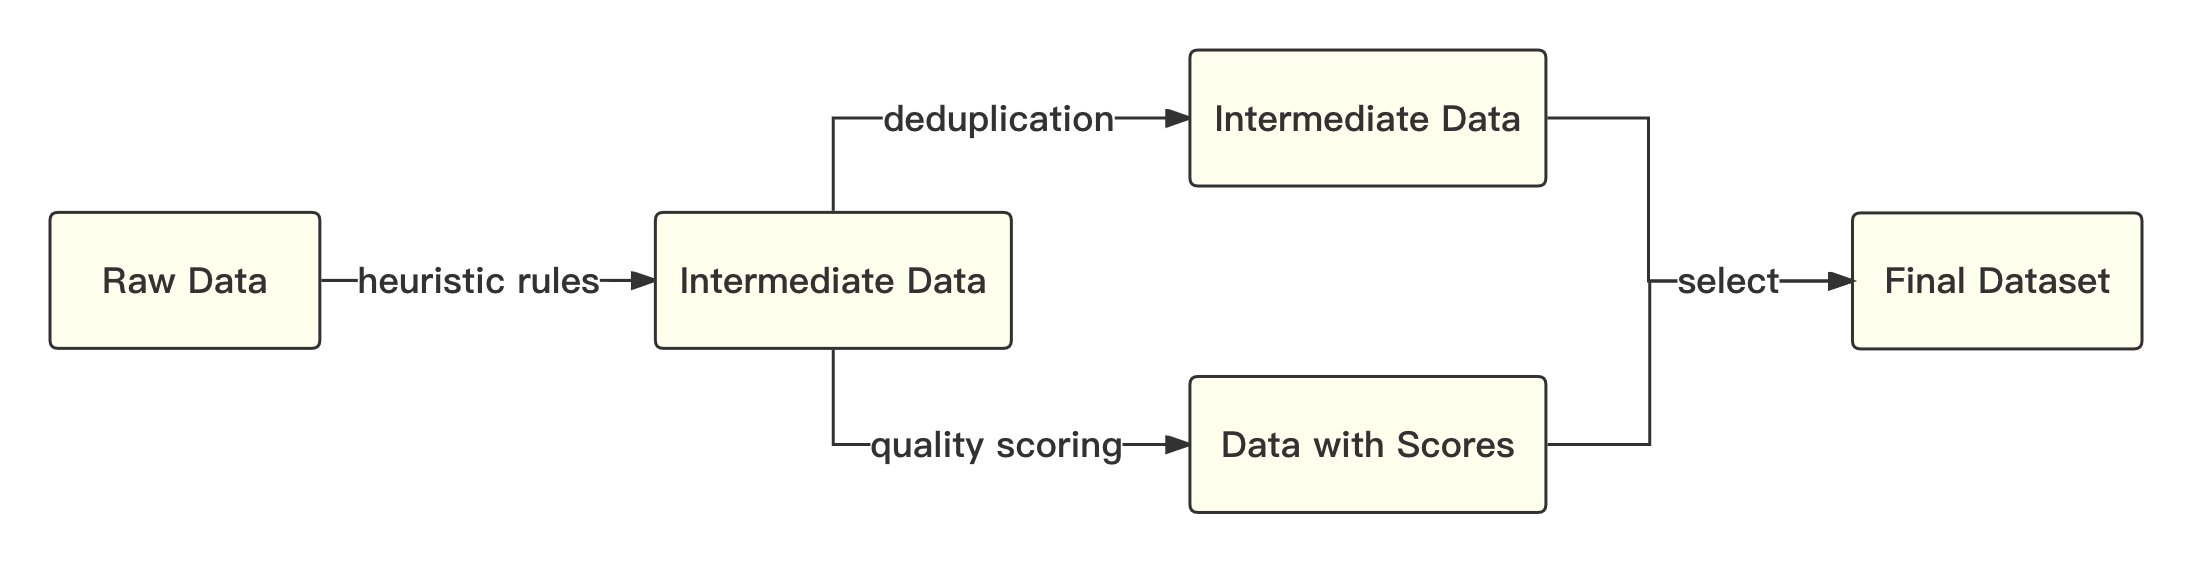 data_process.png